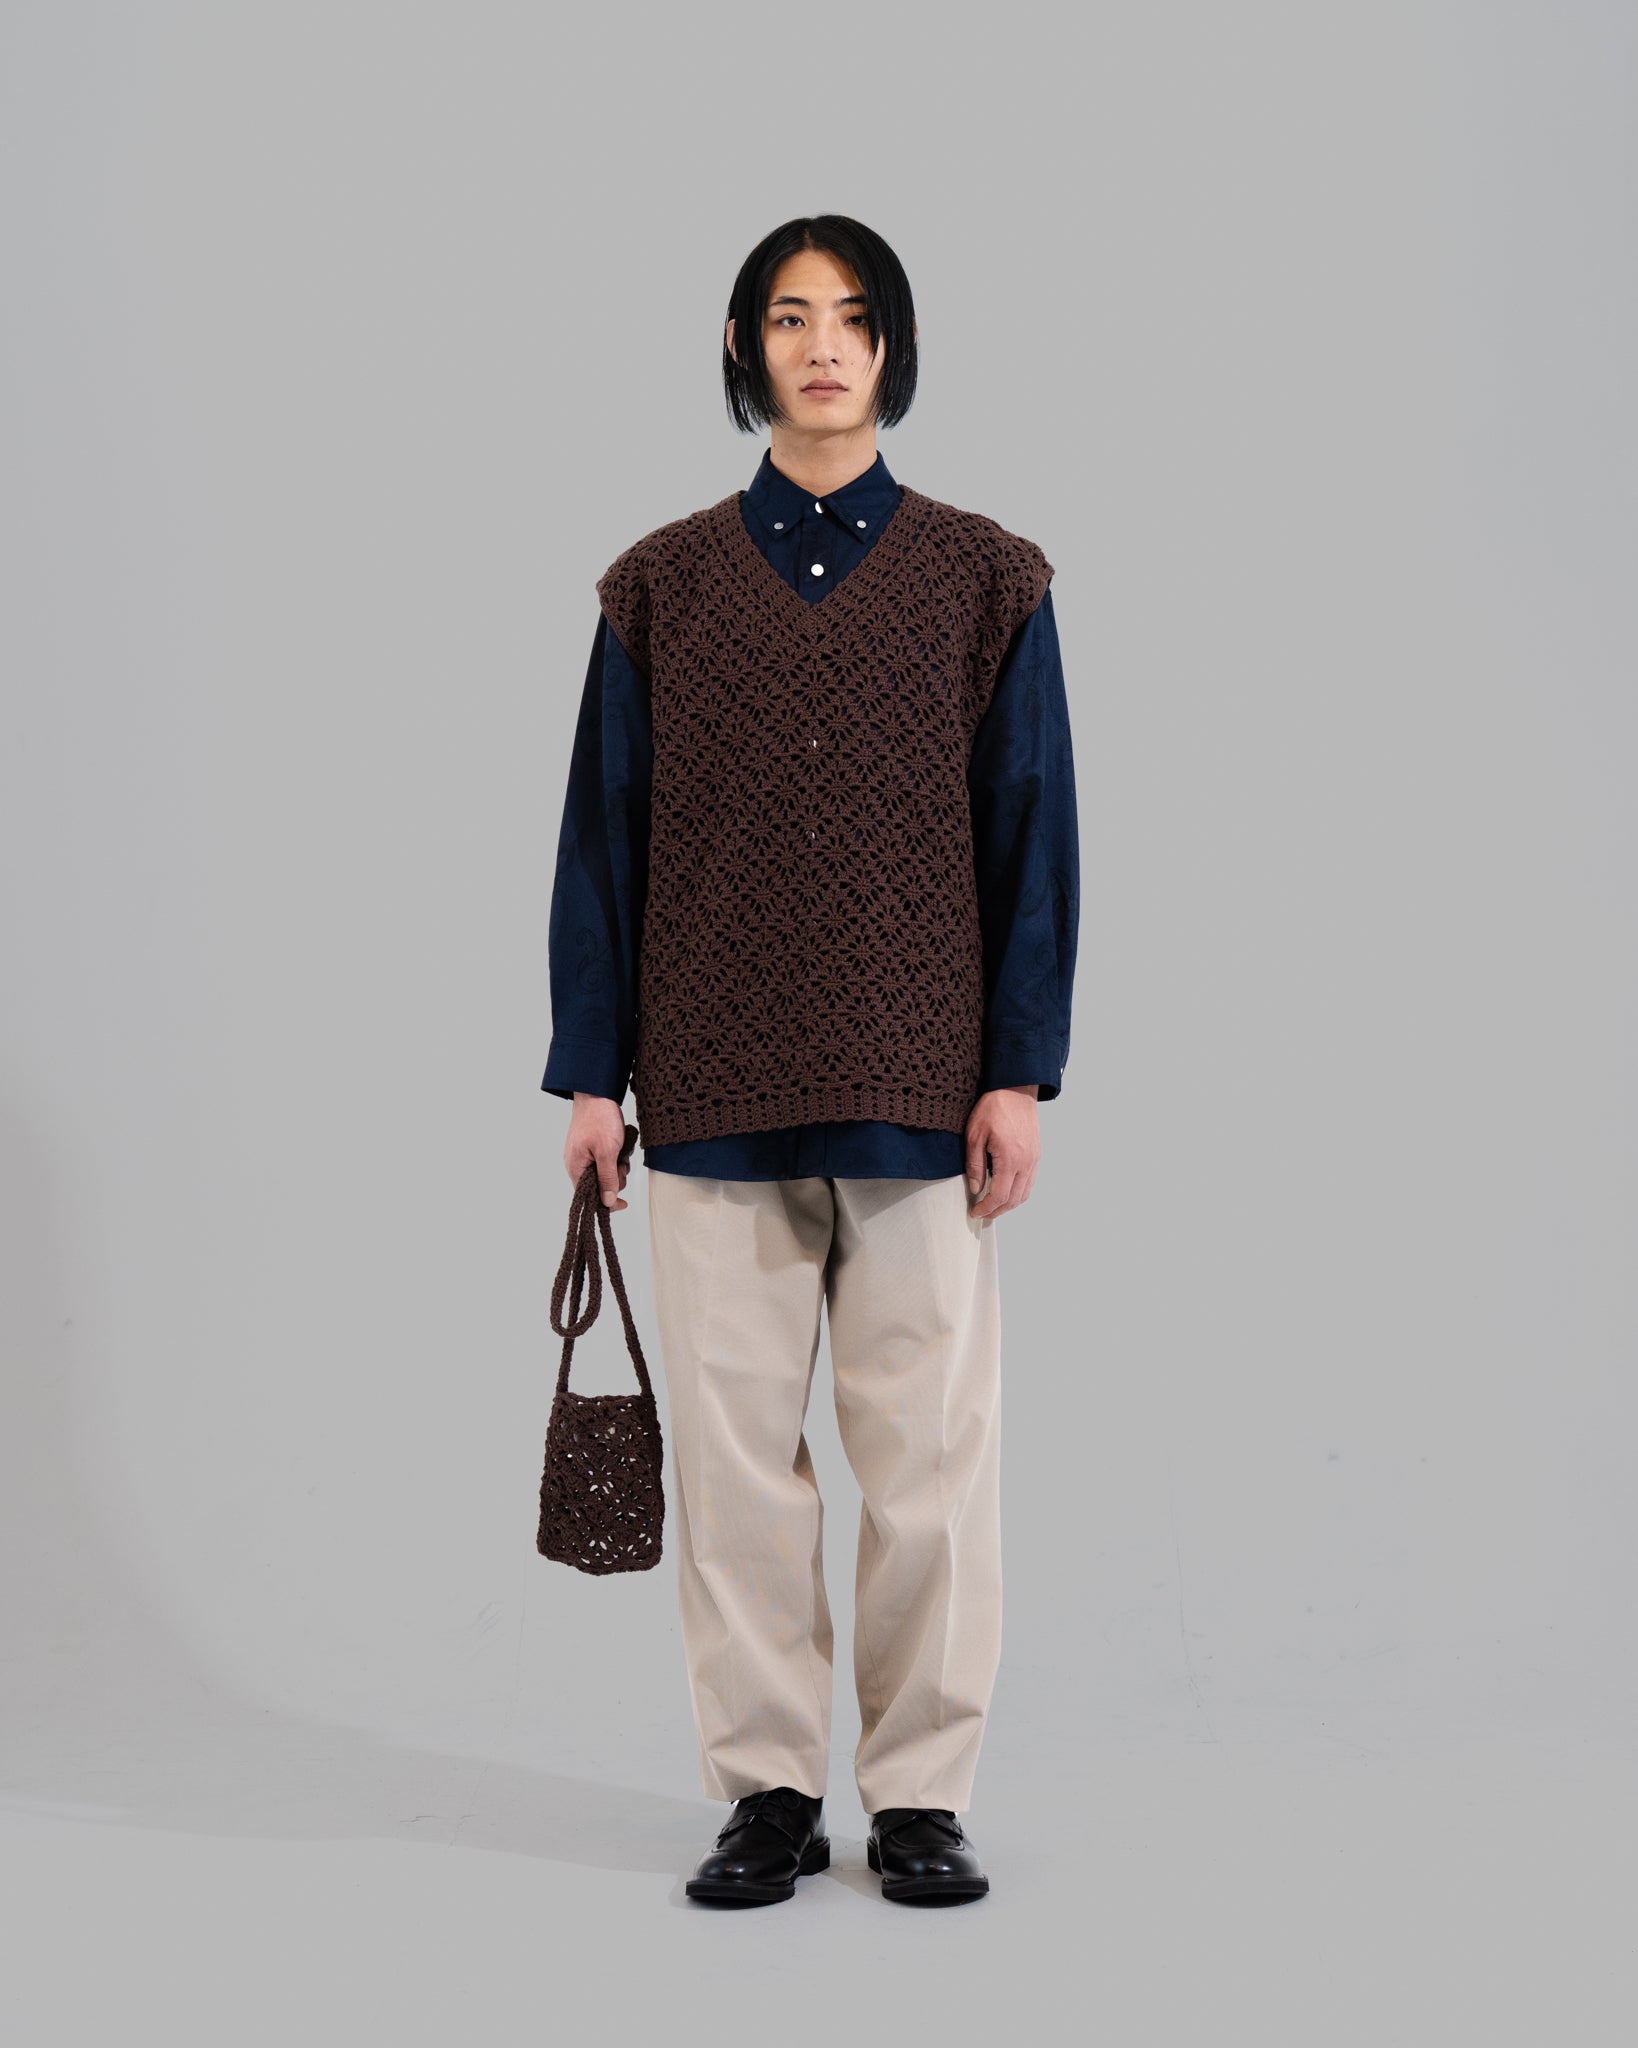 Crochet Hand Knit Mini Bag --Coffee